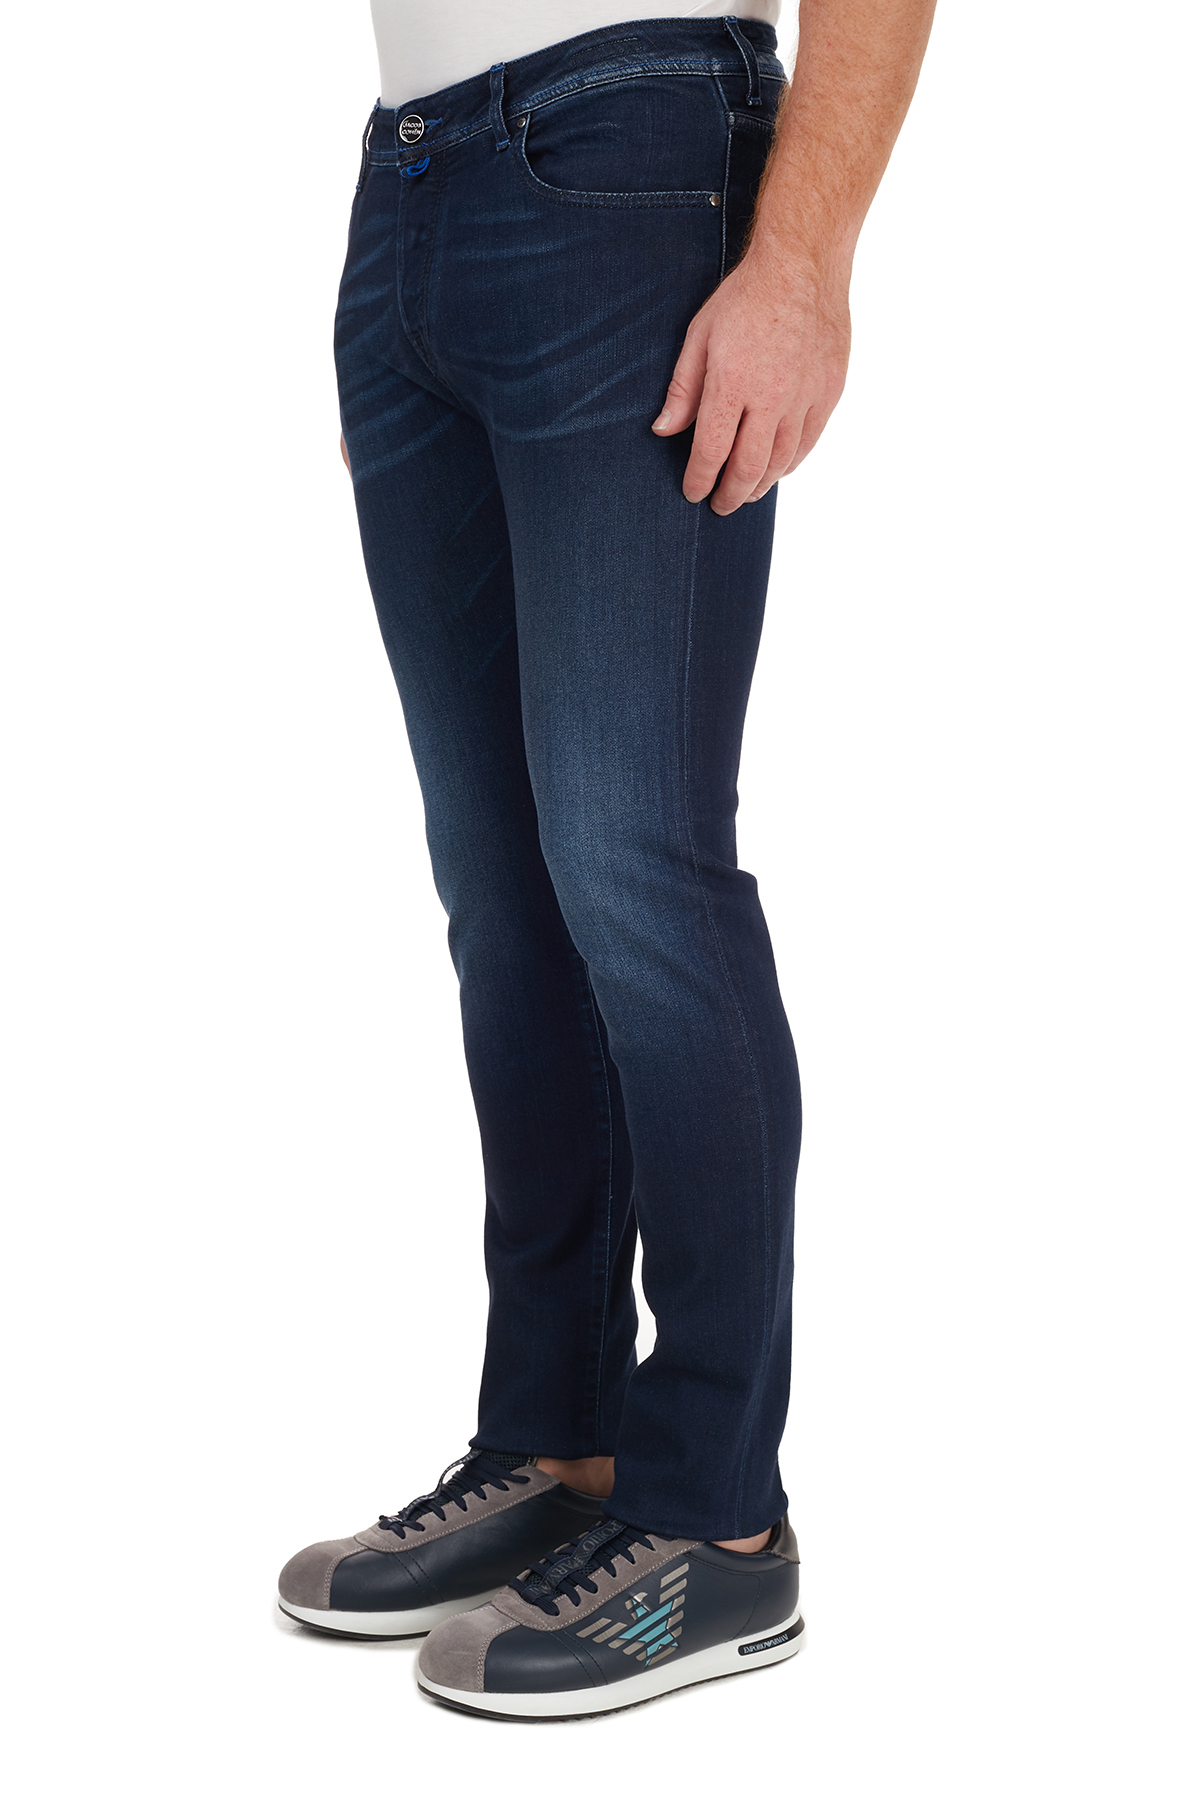 Jacob Cohen Slim Fit Jeans Erkek Kot Pantolon J622 SLIM 08771W2 LACİVERT